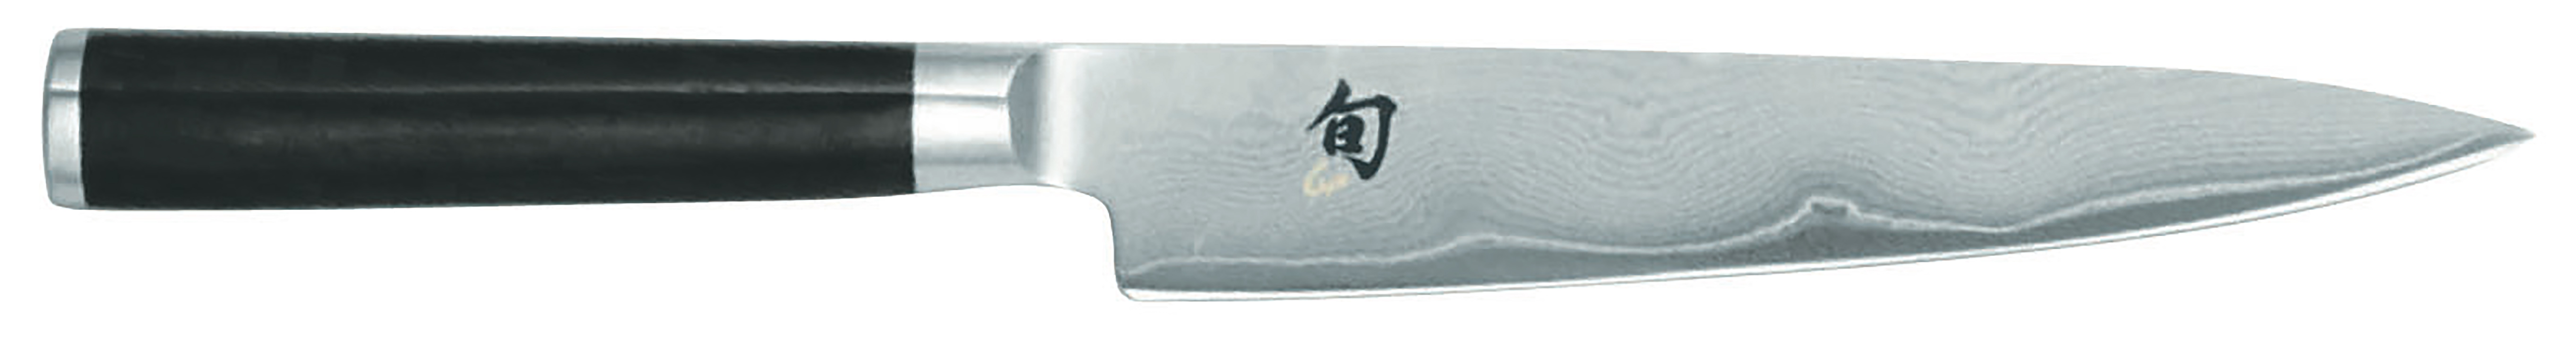 KAI SHUN CLASSIC Allzweckmesser 15cm